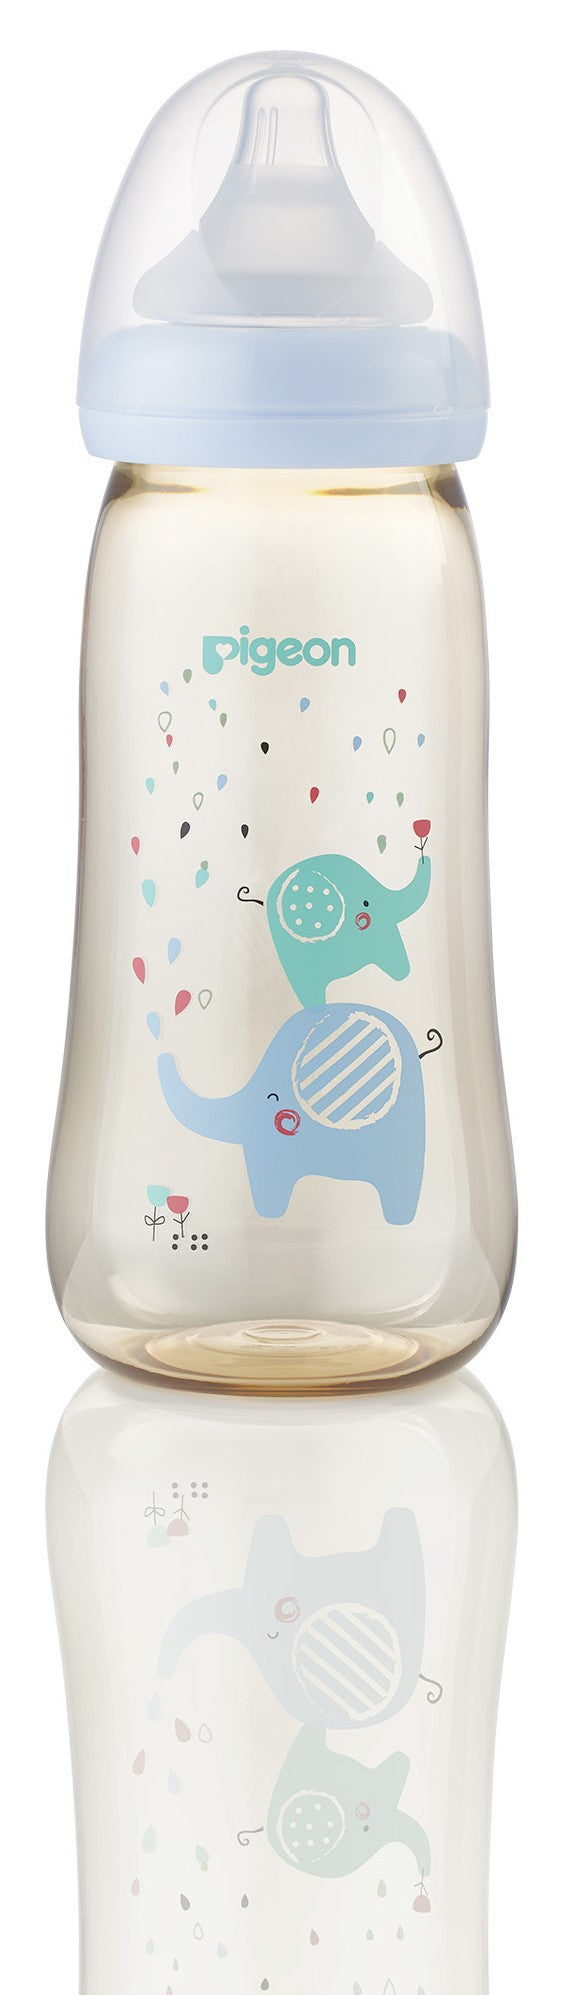 Pigeon SofTouch PPSU Nursing Bottle 330ml (L) - Elephant